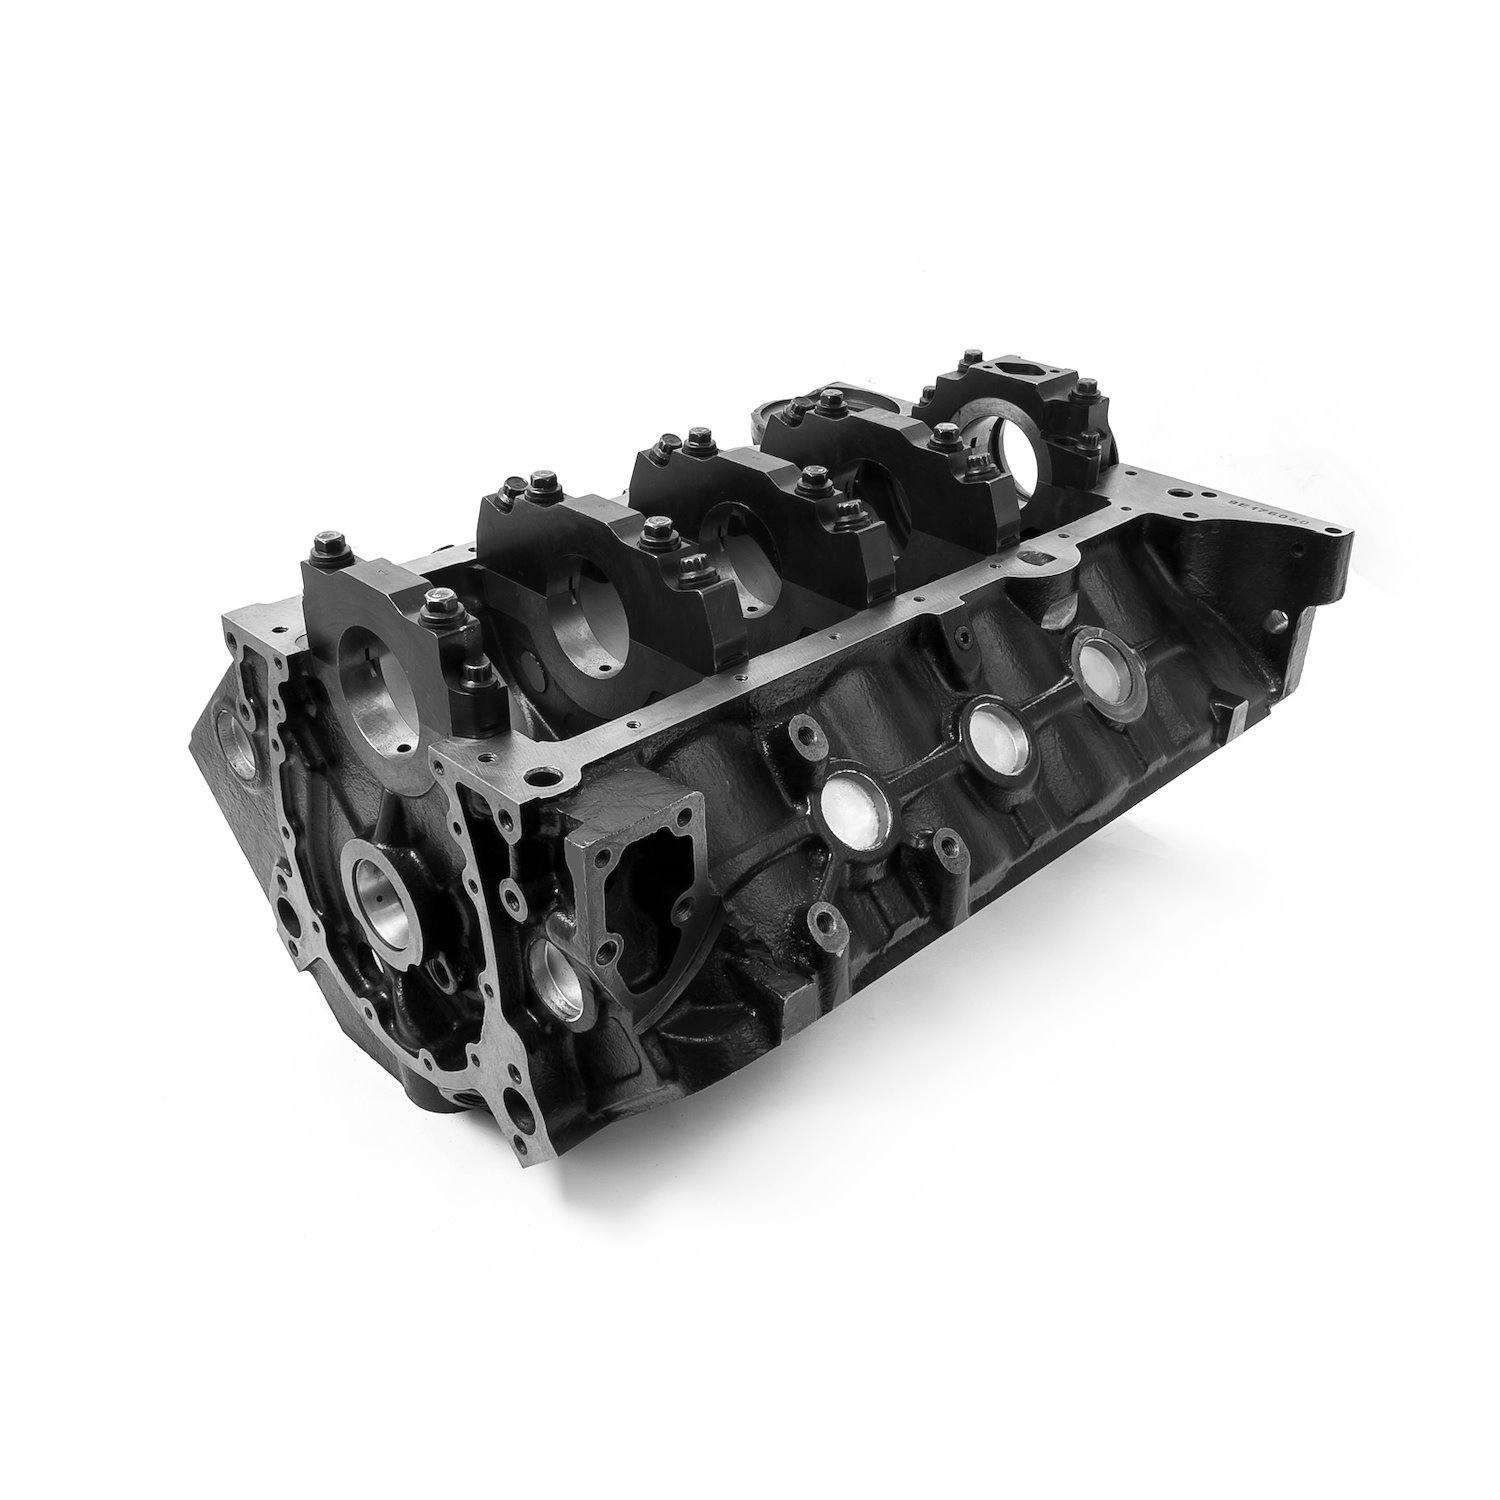 1-286-002-01 Chevy SBC 350 B-4.125 M-350 DH-9.025 4-Bolt Billet Main Bare Iron Engine Block